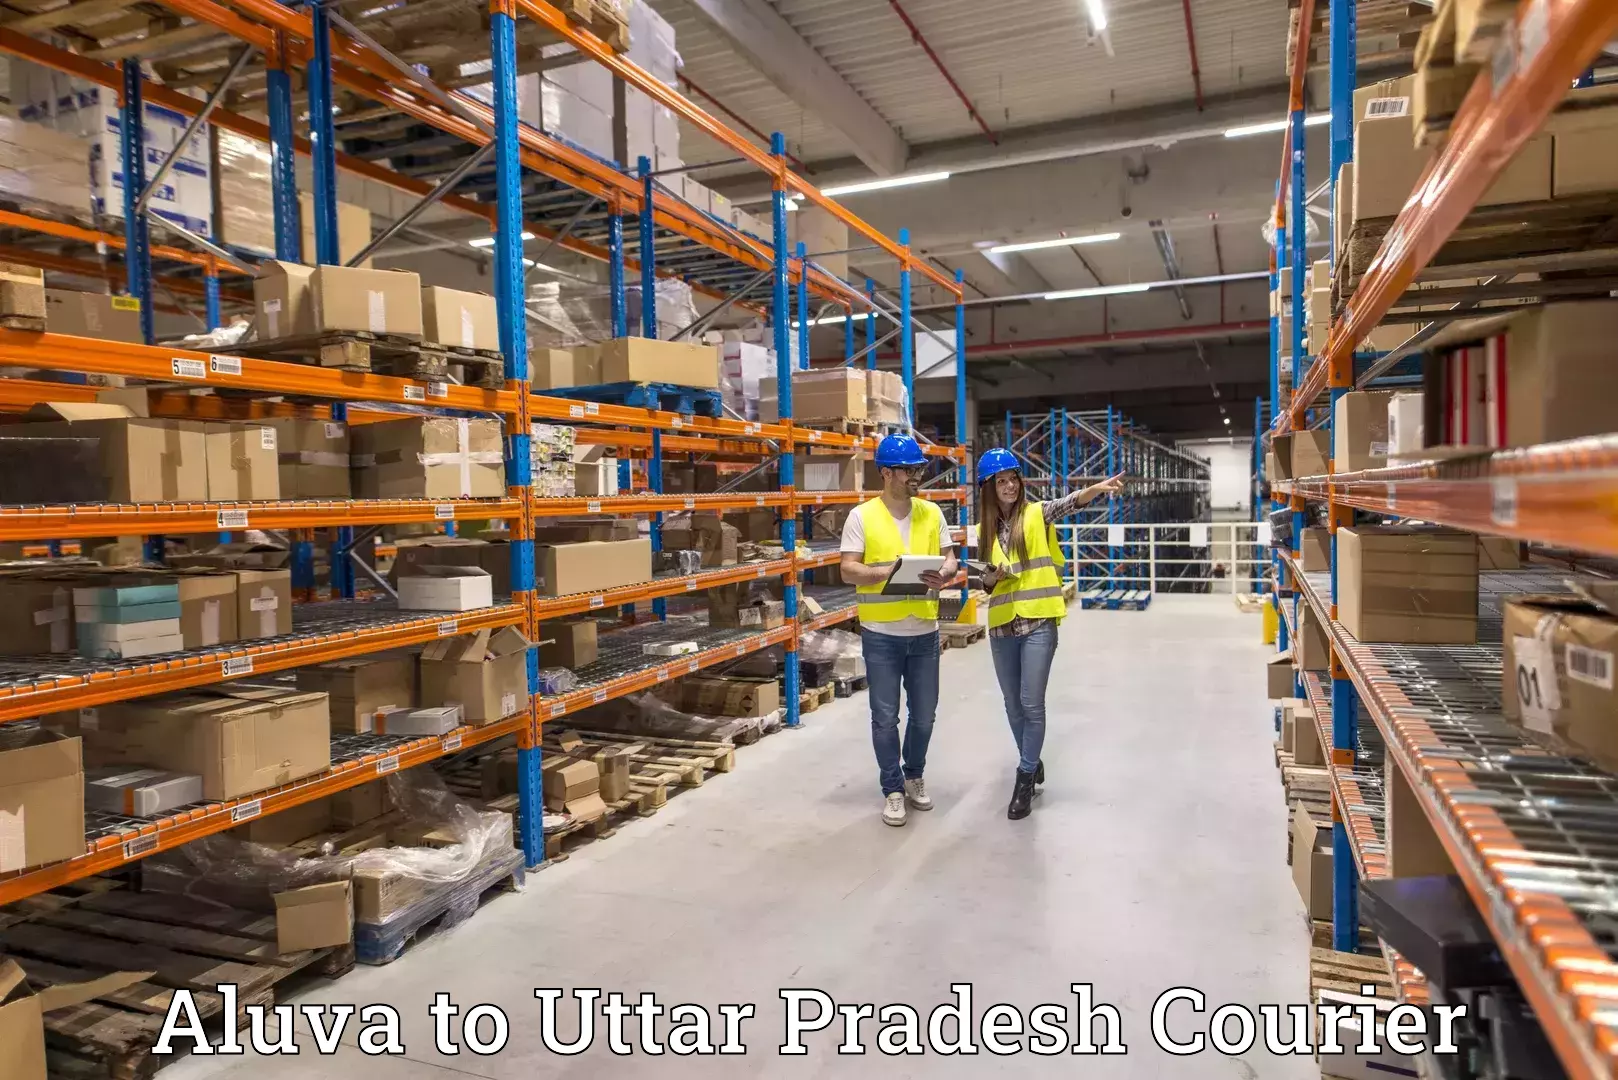 State-of-the-art courier technology Aluva to Uttar Pradesh